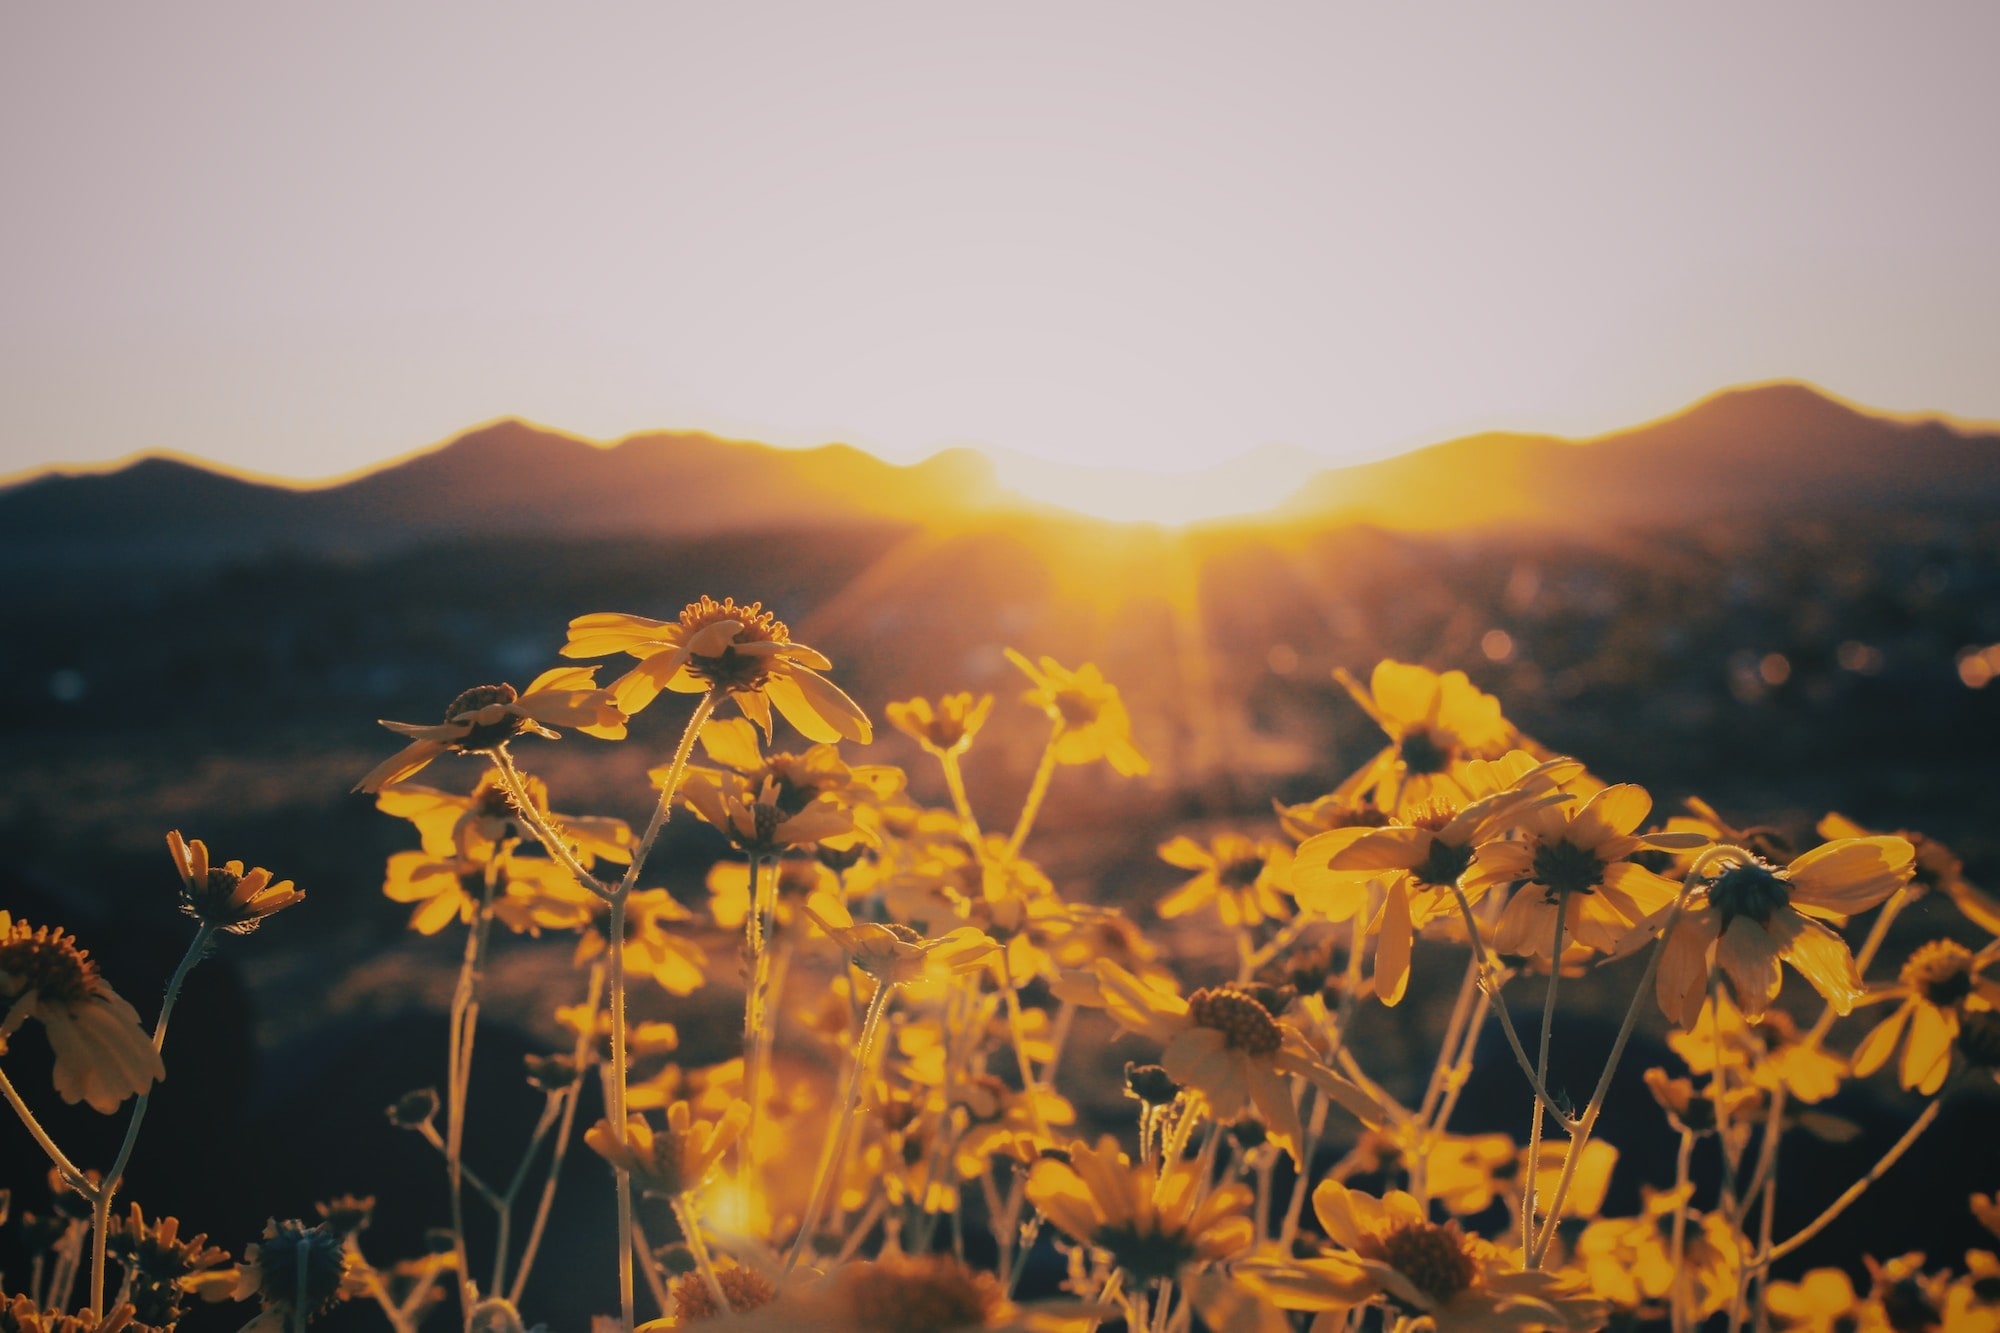 Image of sunflowers with sunlight shining down on them. Surviving despite trauma.